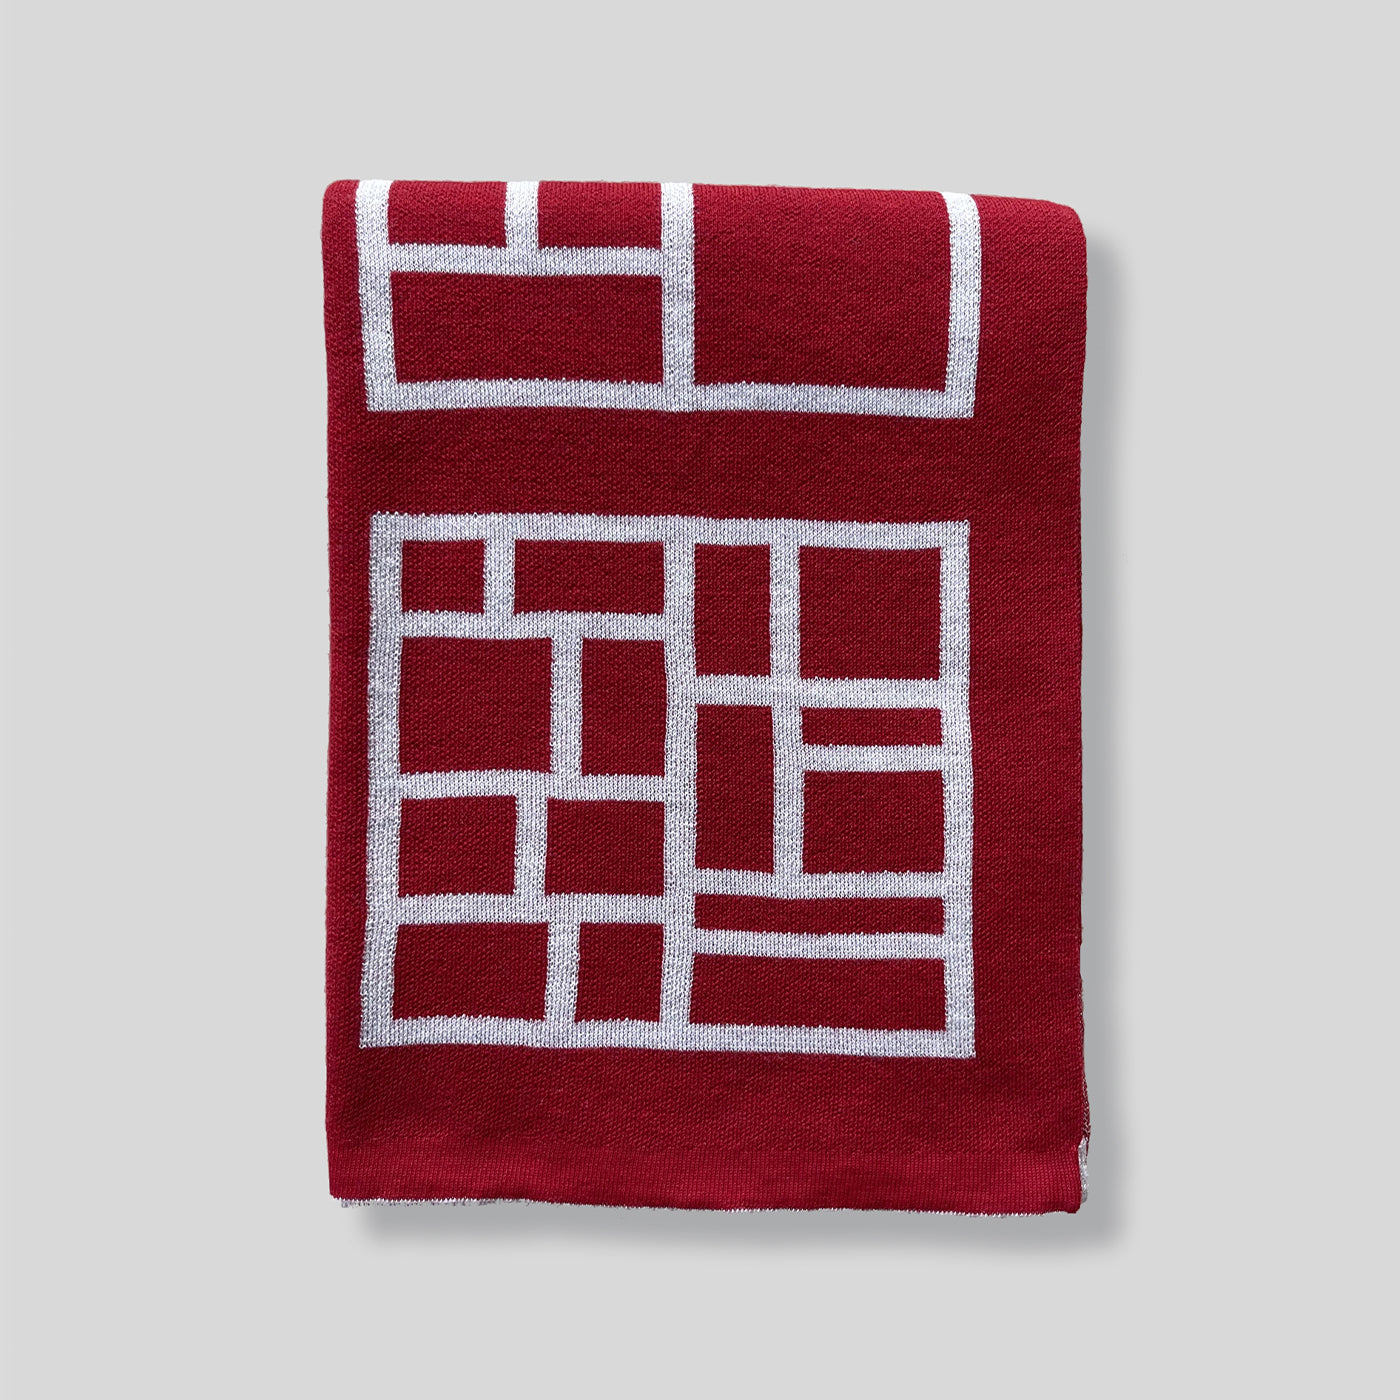 Insula Red Blanket par V. Mancini et P. Iaconantonio - Vue alternative 1